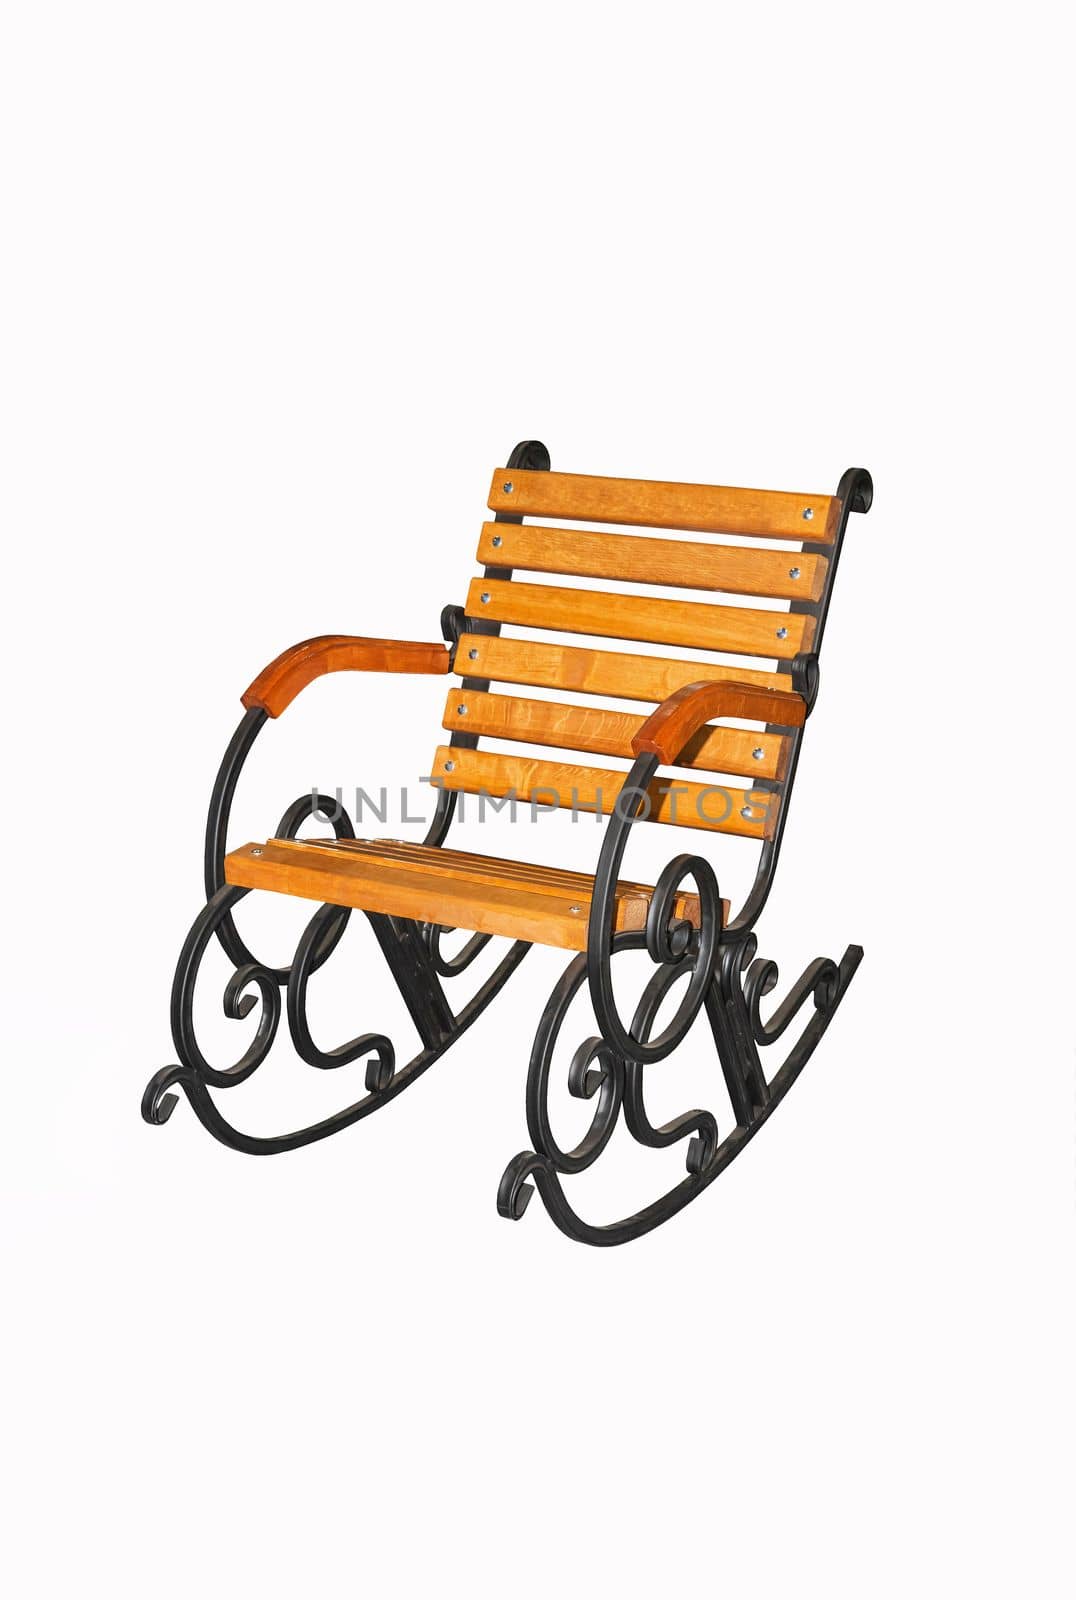 Wrought iron rocking chair on white background. Interior element.